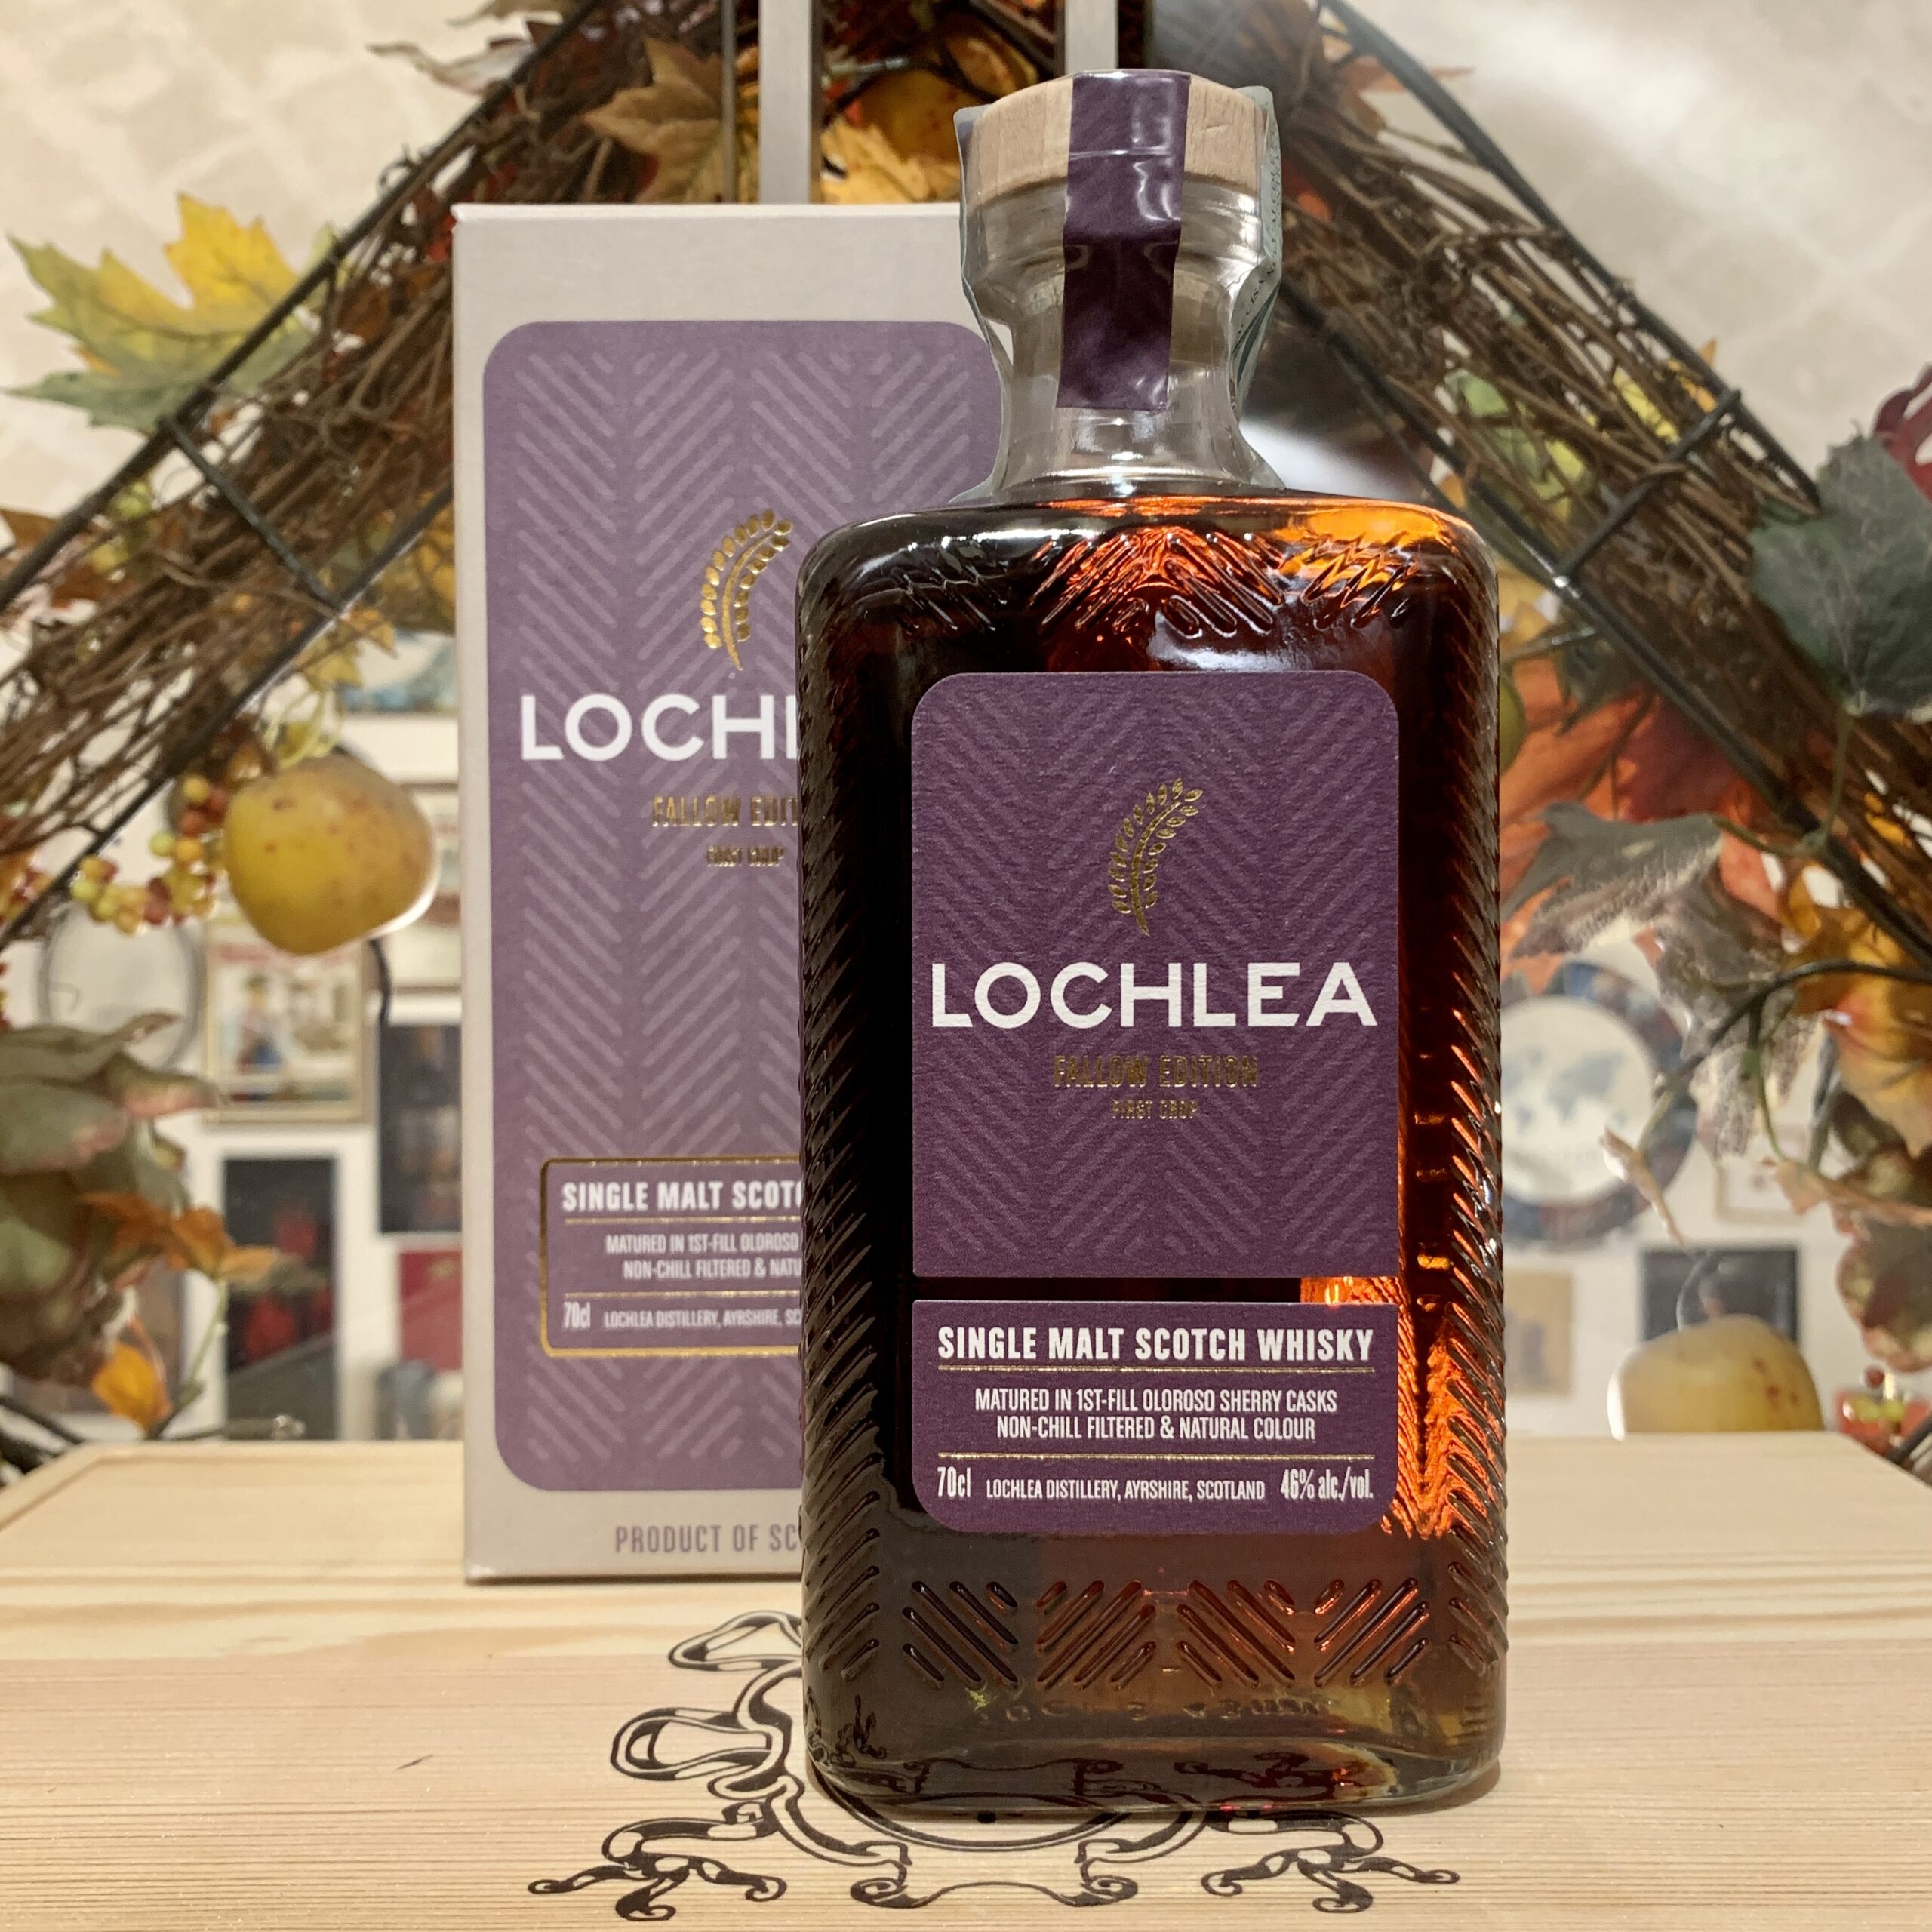 Lochlea "Fallow Edition 1st Crop" Lowlands Single Malt Scotch Whisky